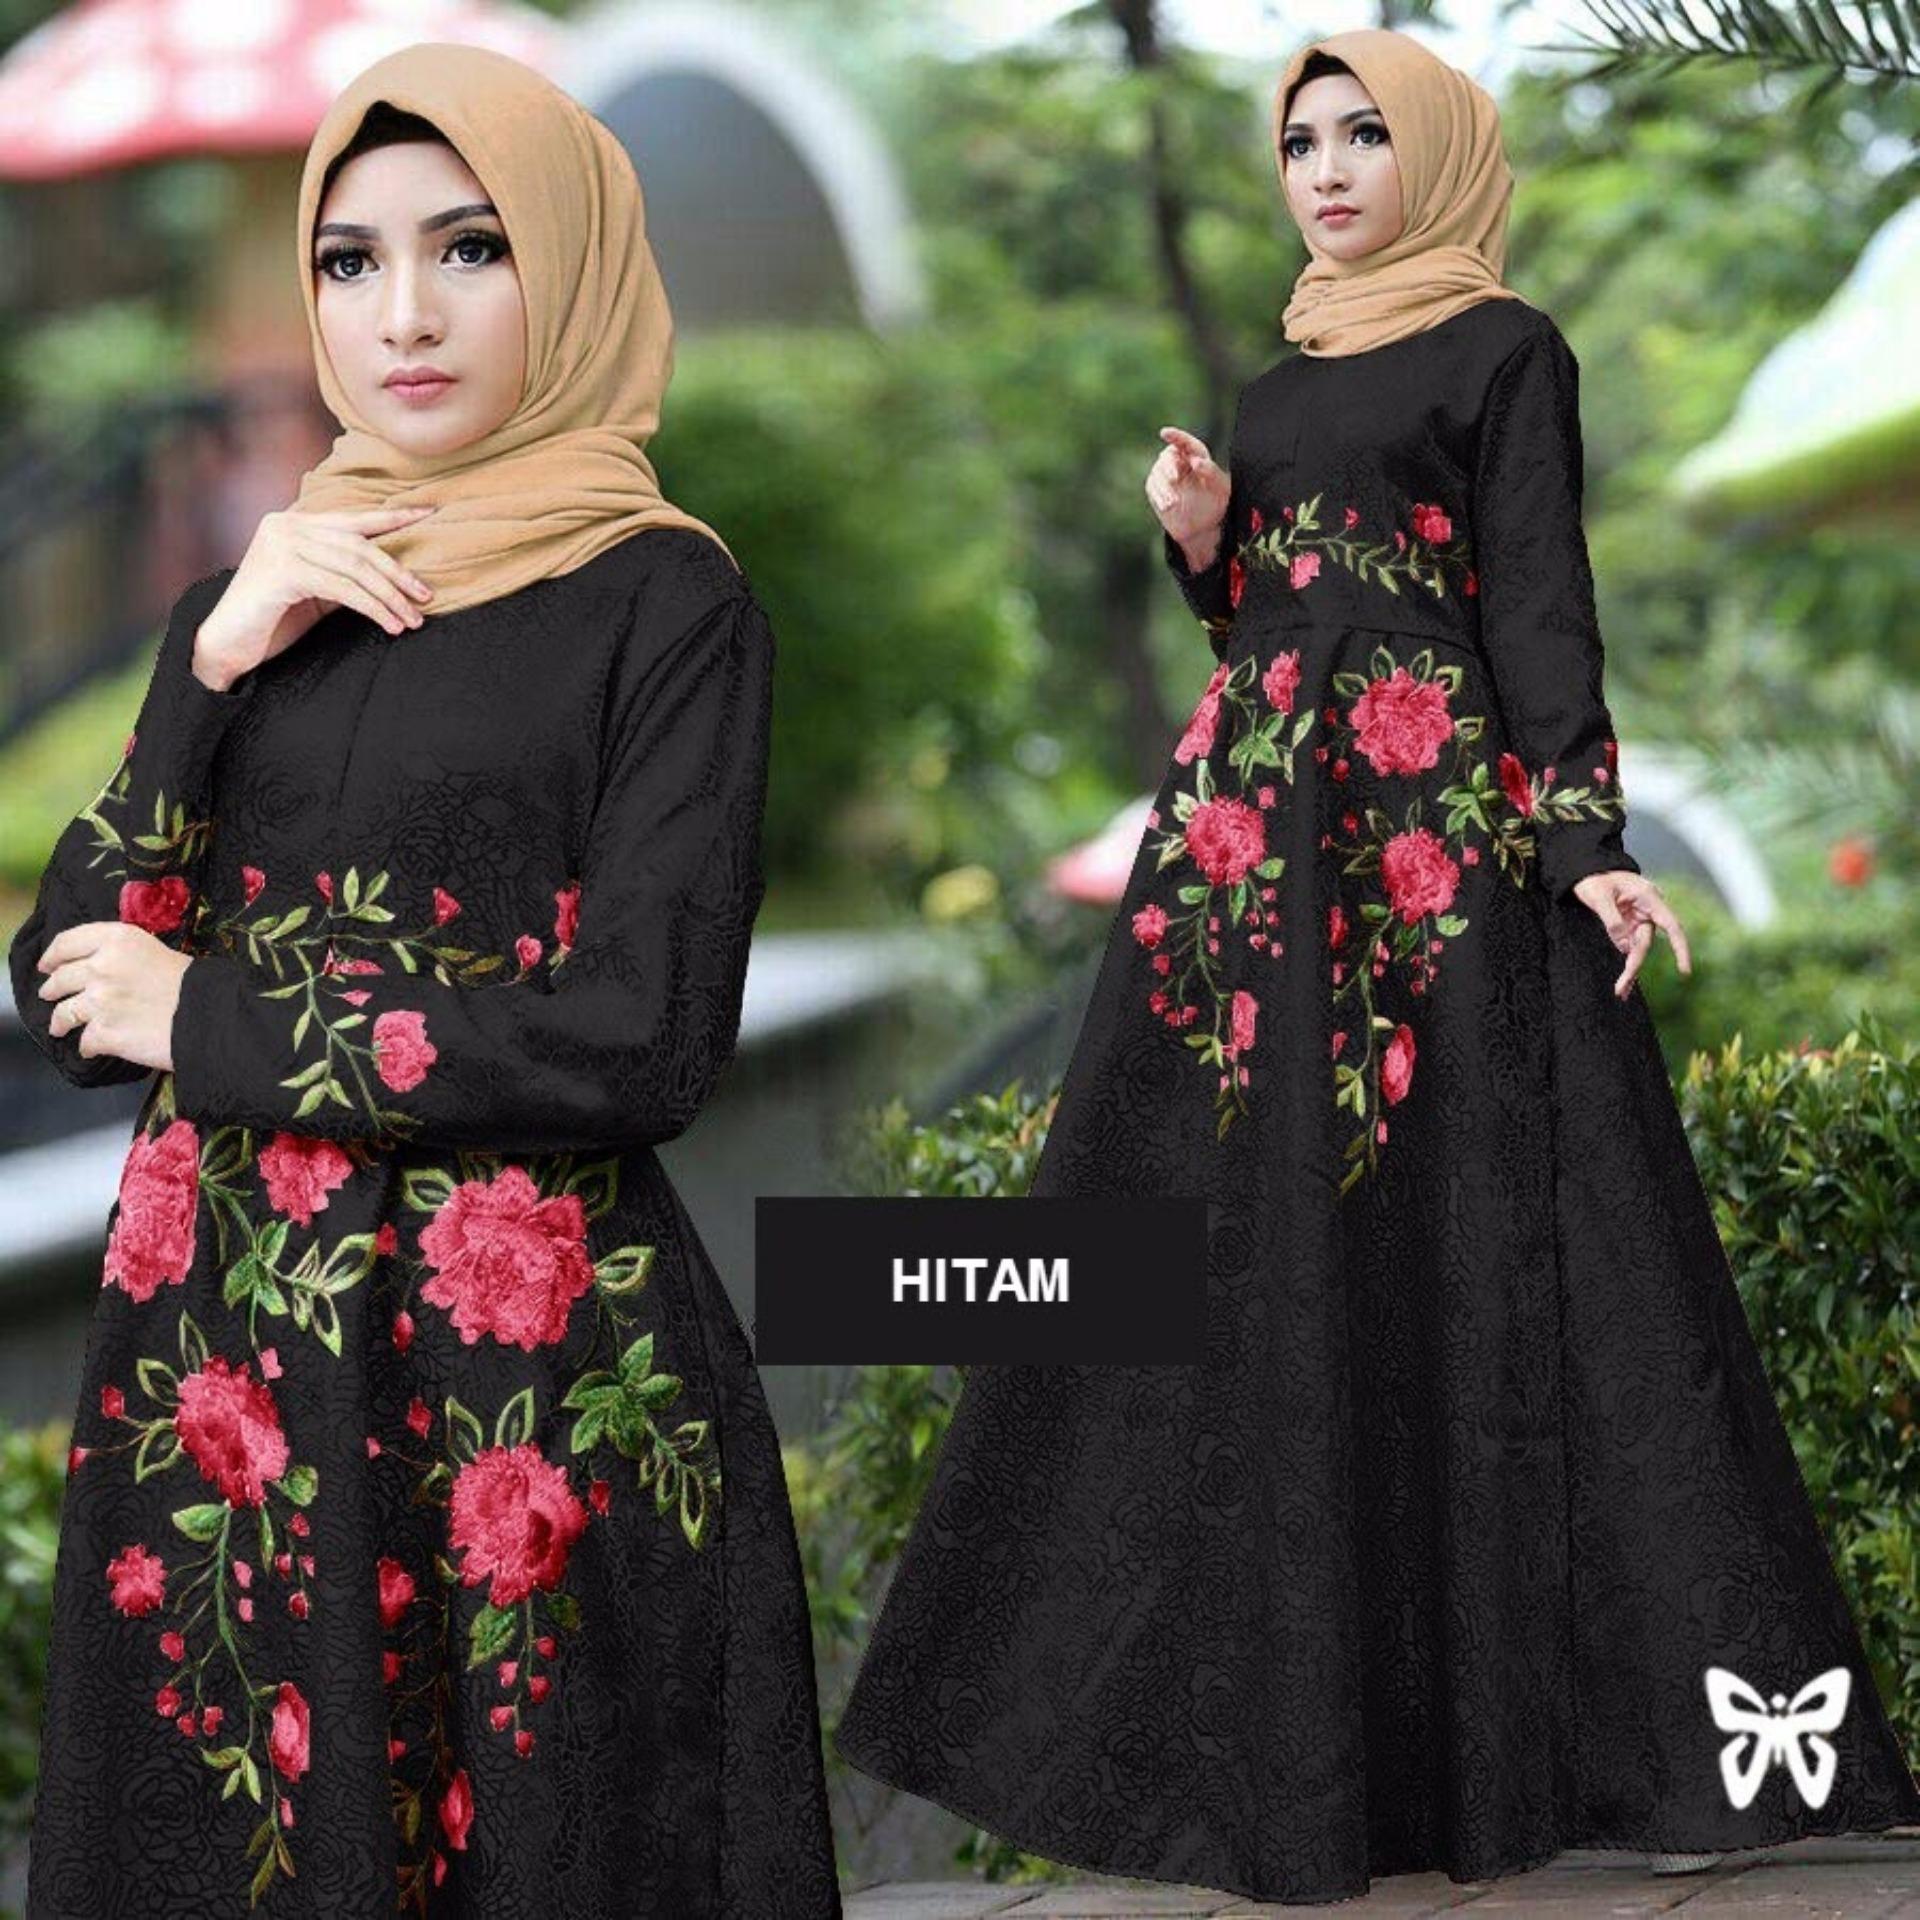 Flavia Store Maxi Dress Lengan Panjang Bordir Bunga FS0135 - HITAM / Gamis / Gaun Pesta Muslimah / Baju Muslim Wanita / Srayana